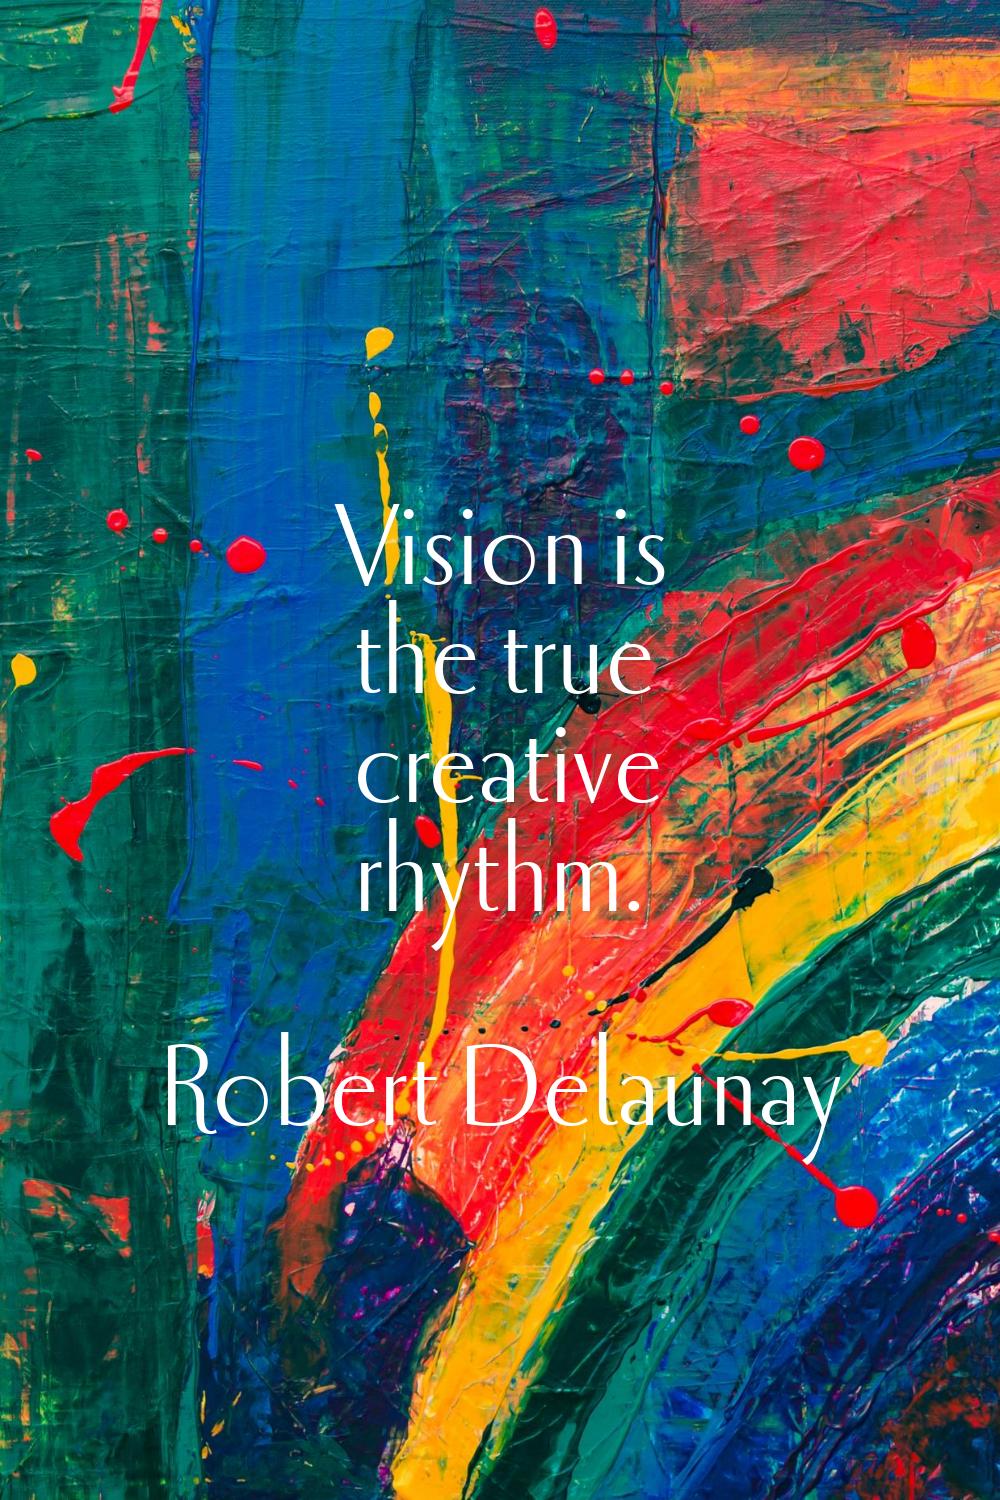 Vision is the true creative rhythm.